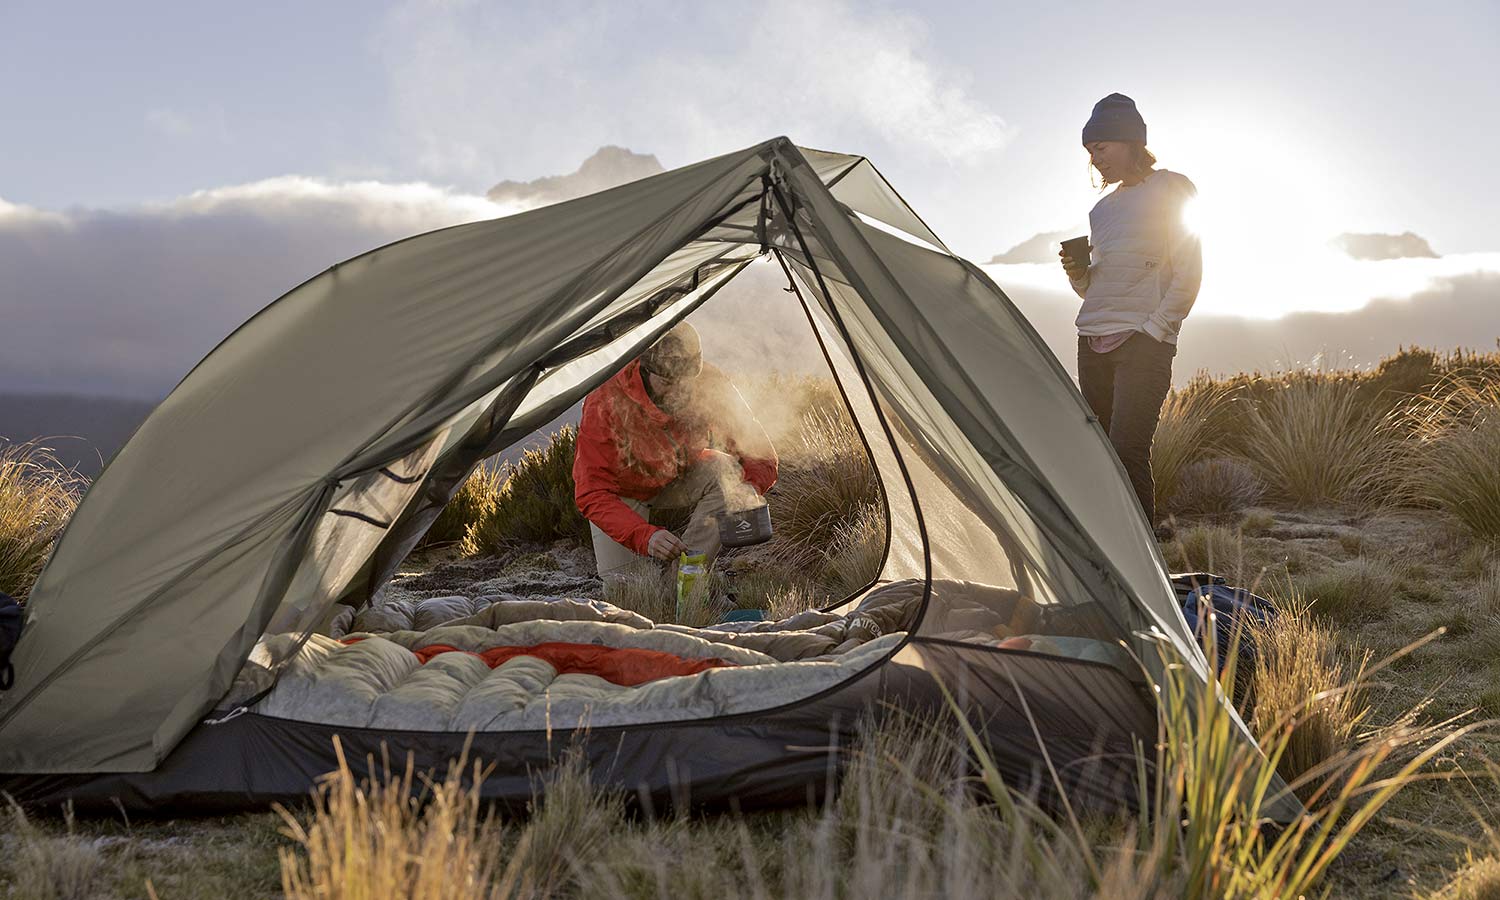 Sea to Summit Alto and Telos TR lightweight tents, Tension Ridge modular 3-season ultralight bikepacking tent